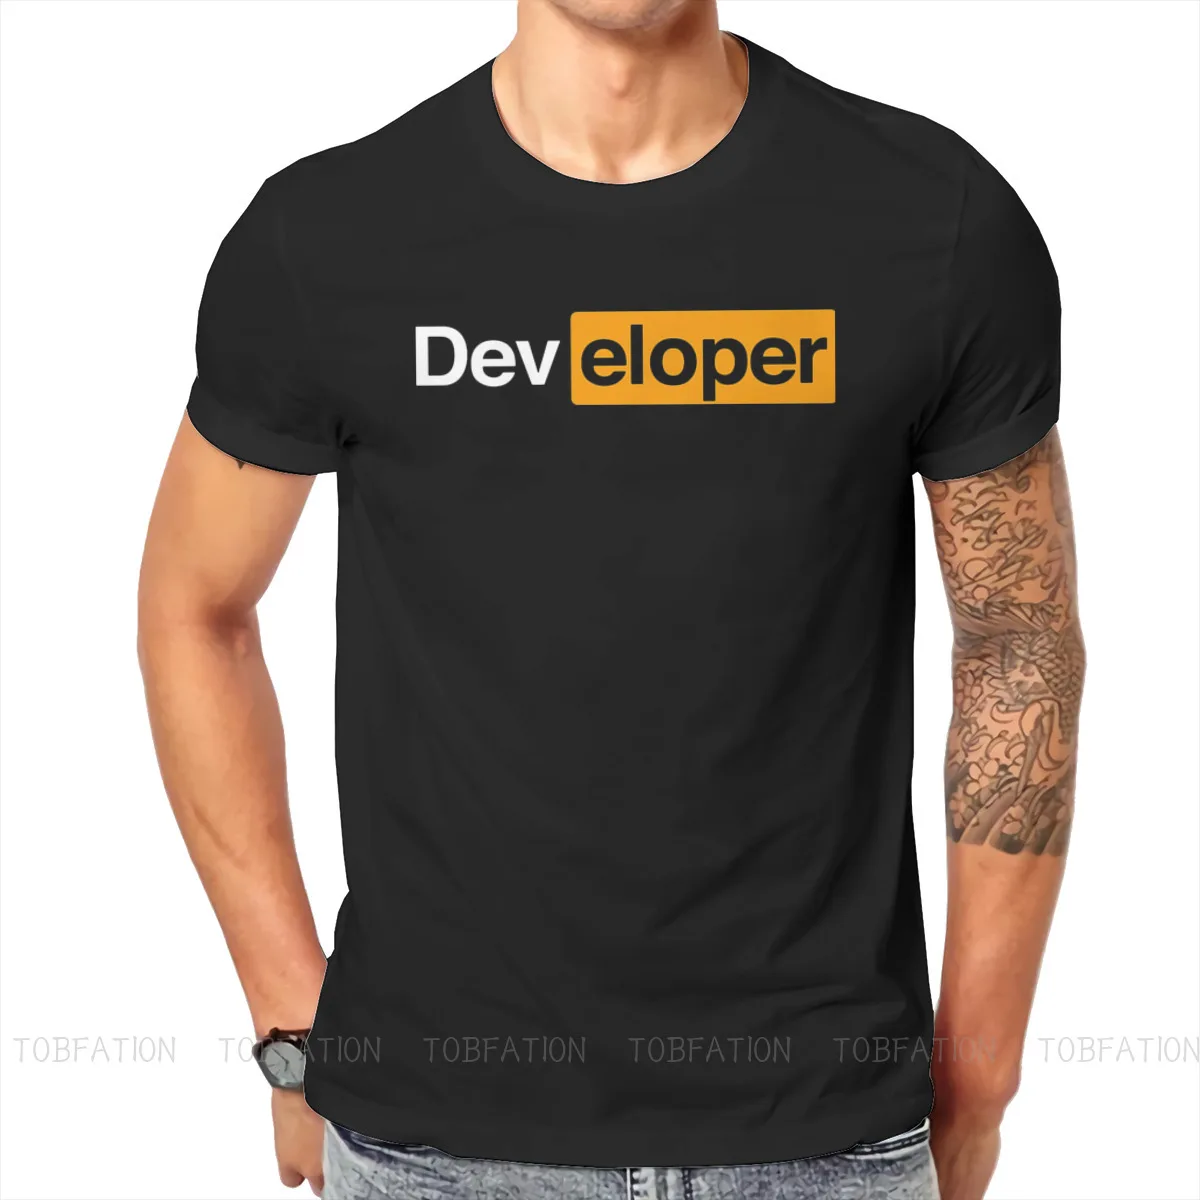 Developer TShirt For Men Software Developer IT Programmer Geek Clothing Novelty T Shirt Comfortable Printed Loose